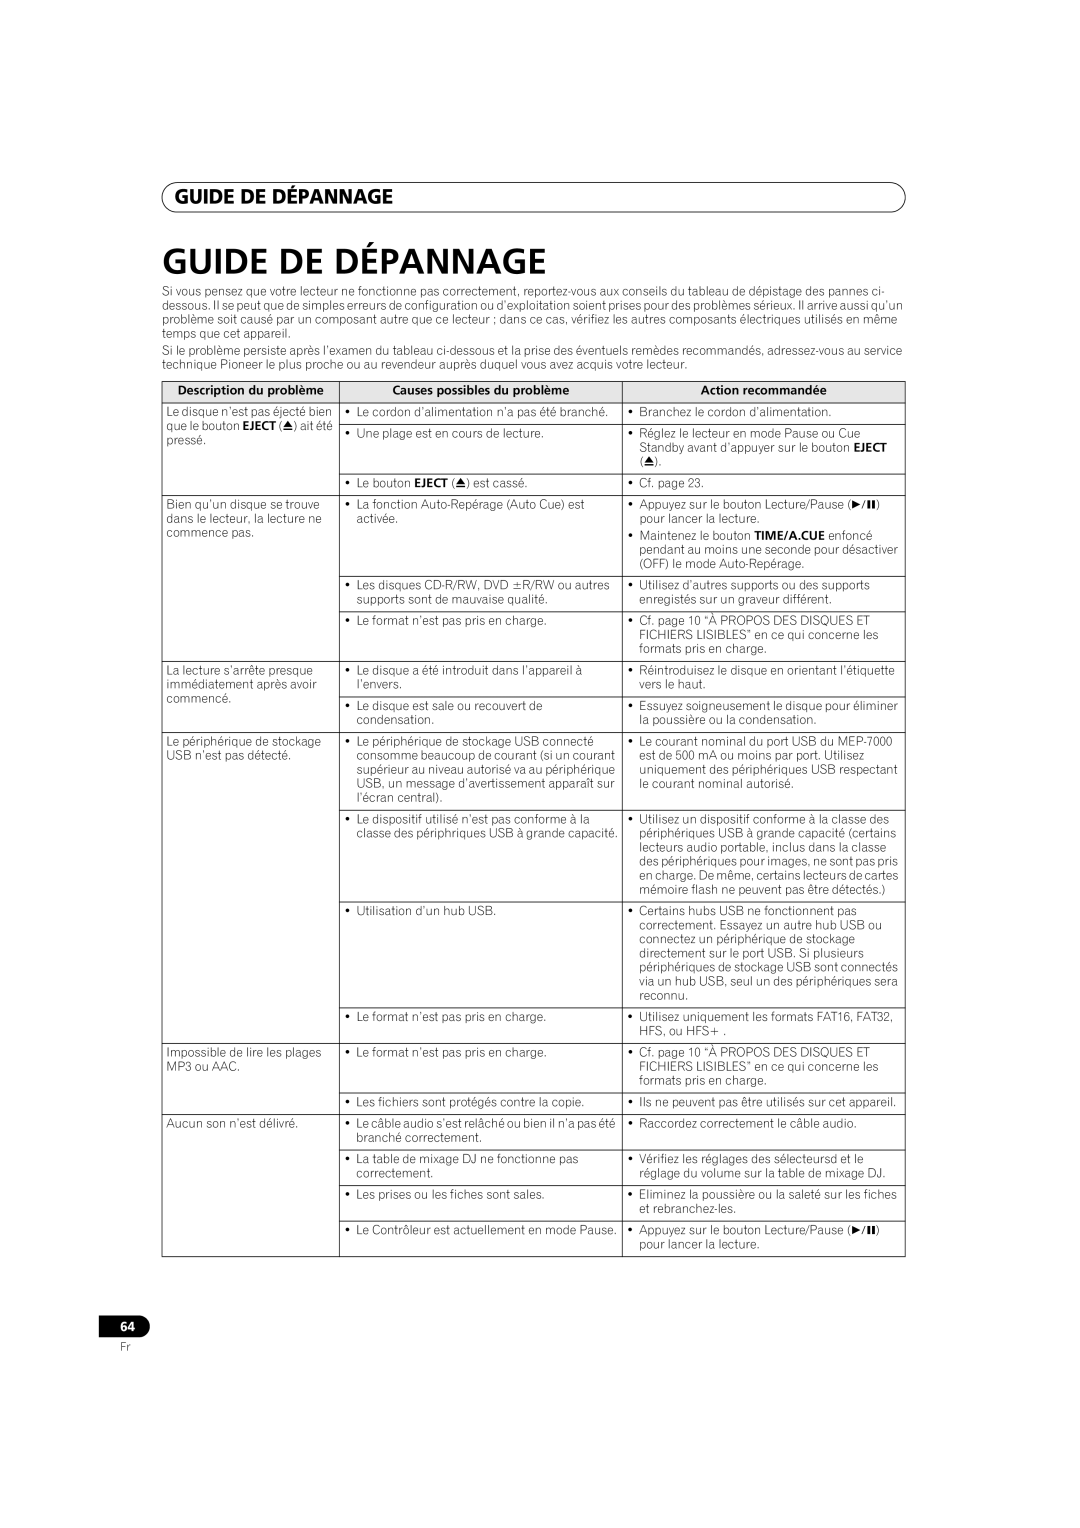 Pioneer MEP-7000 operating instructions Guide De Dépannage 